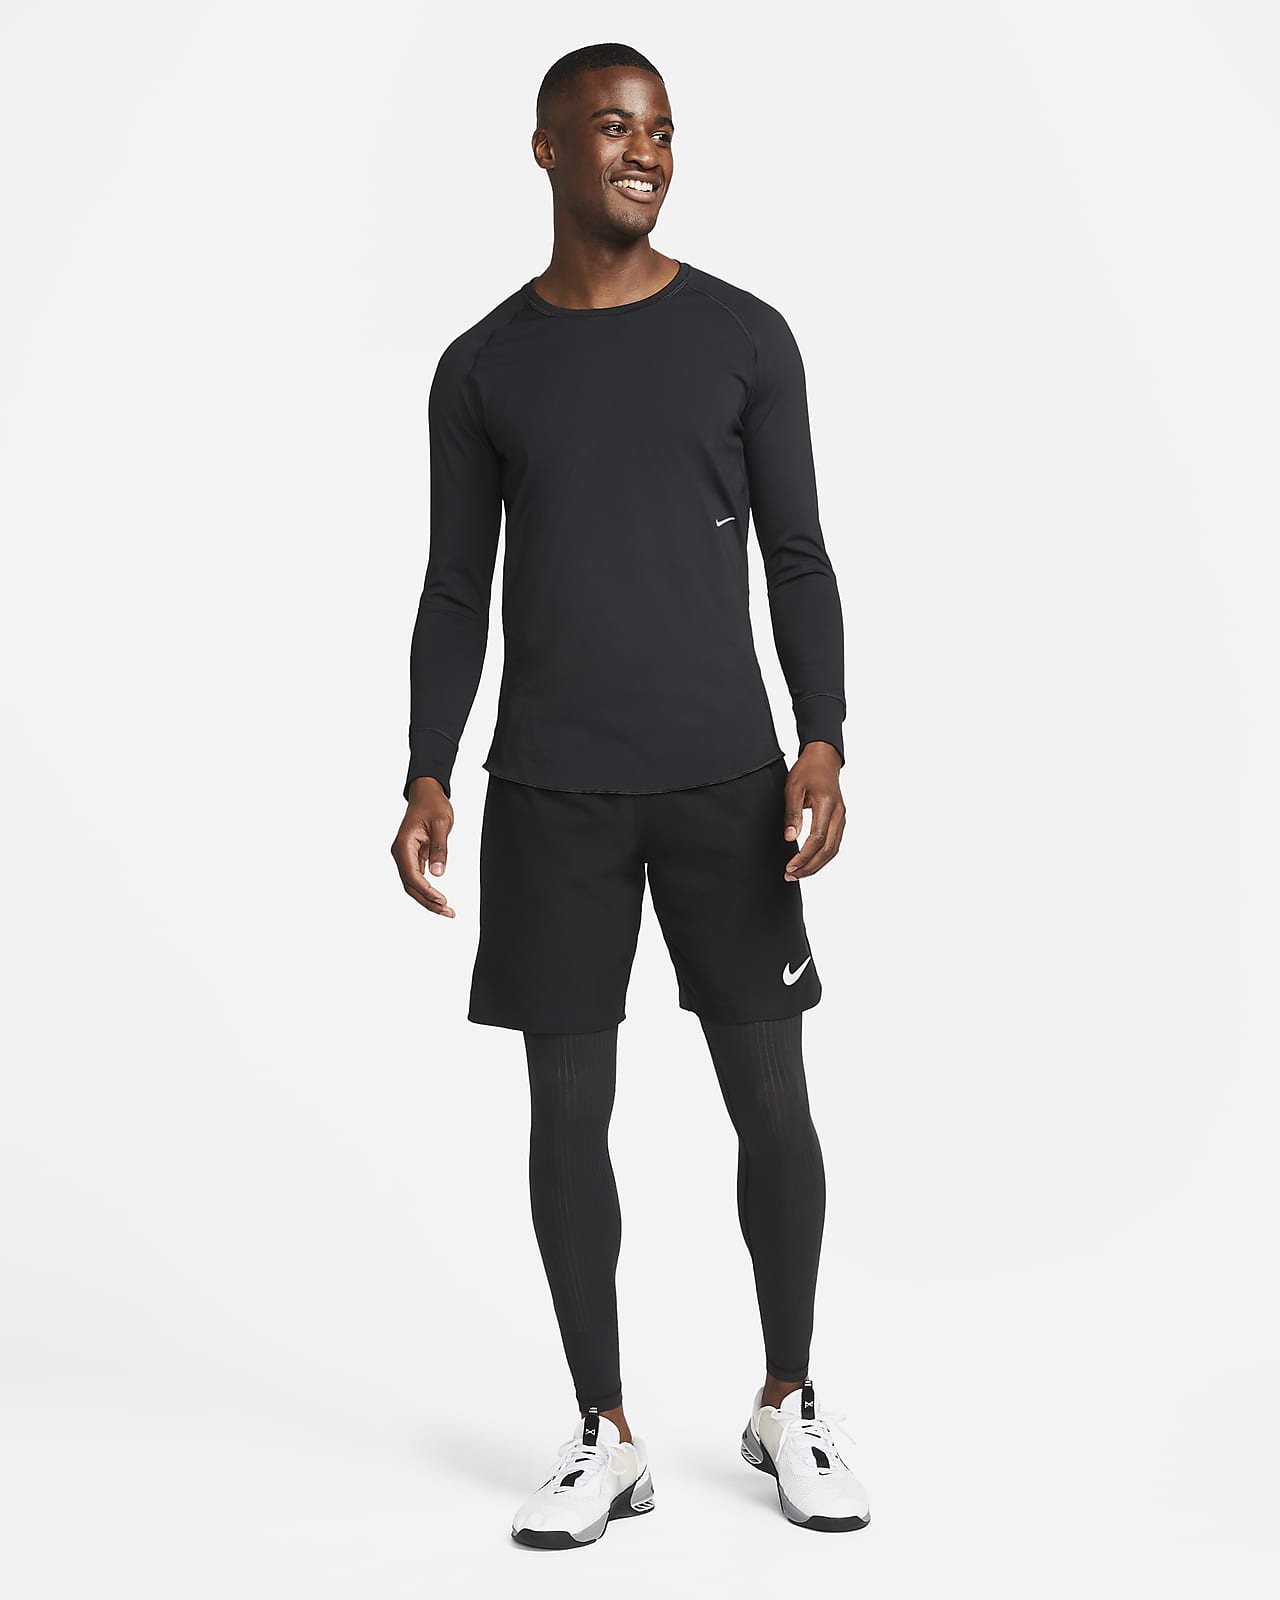 Sale  Nike Performance Clothing - Fitness - JD Sports Global